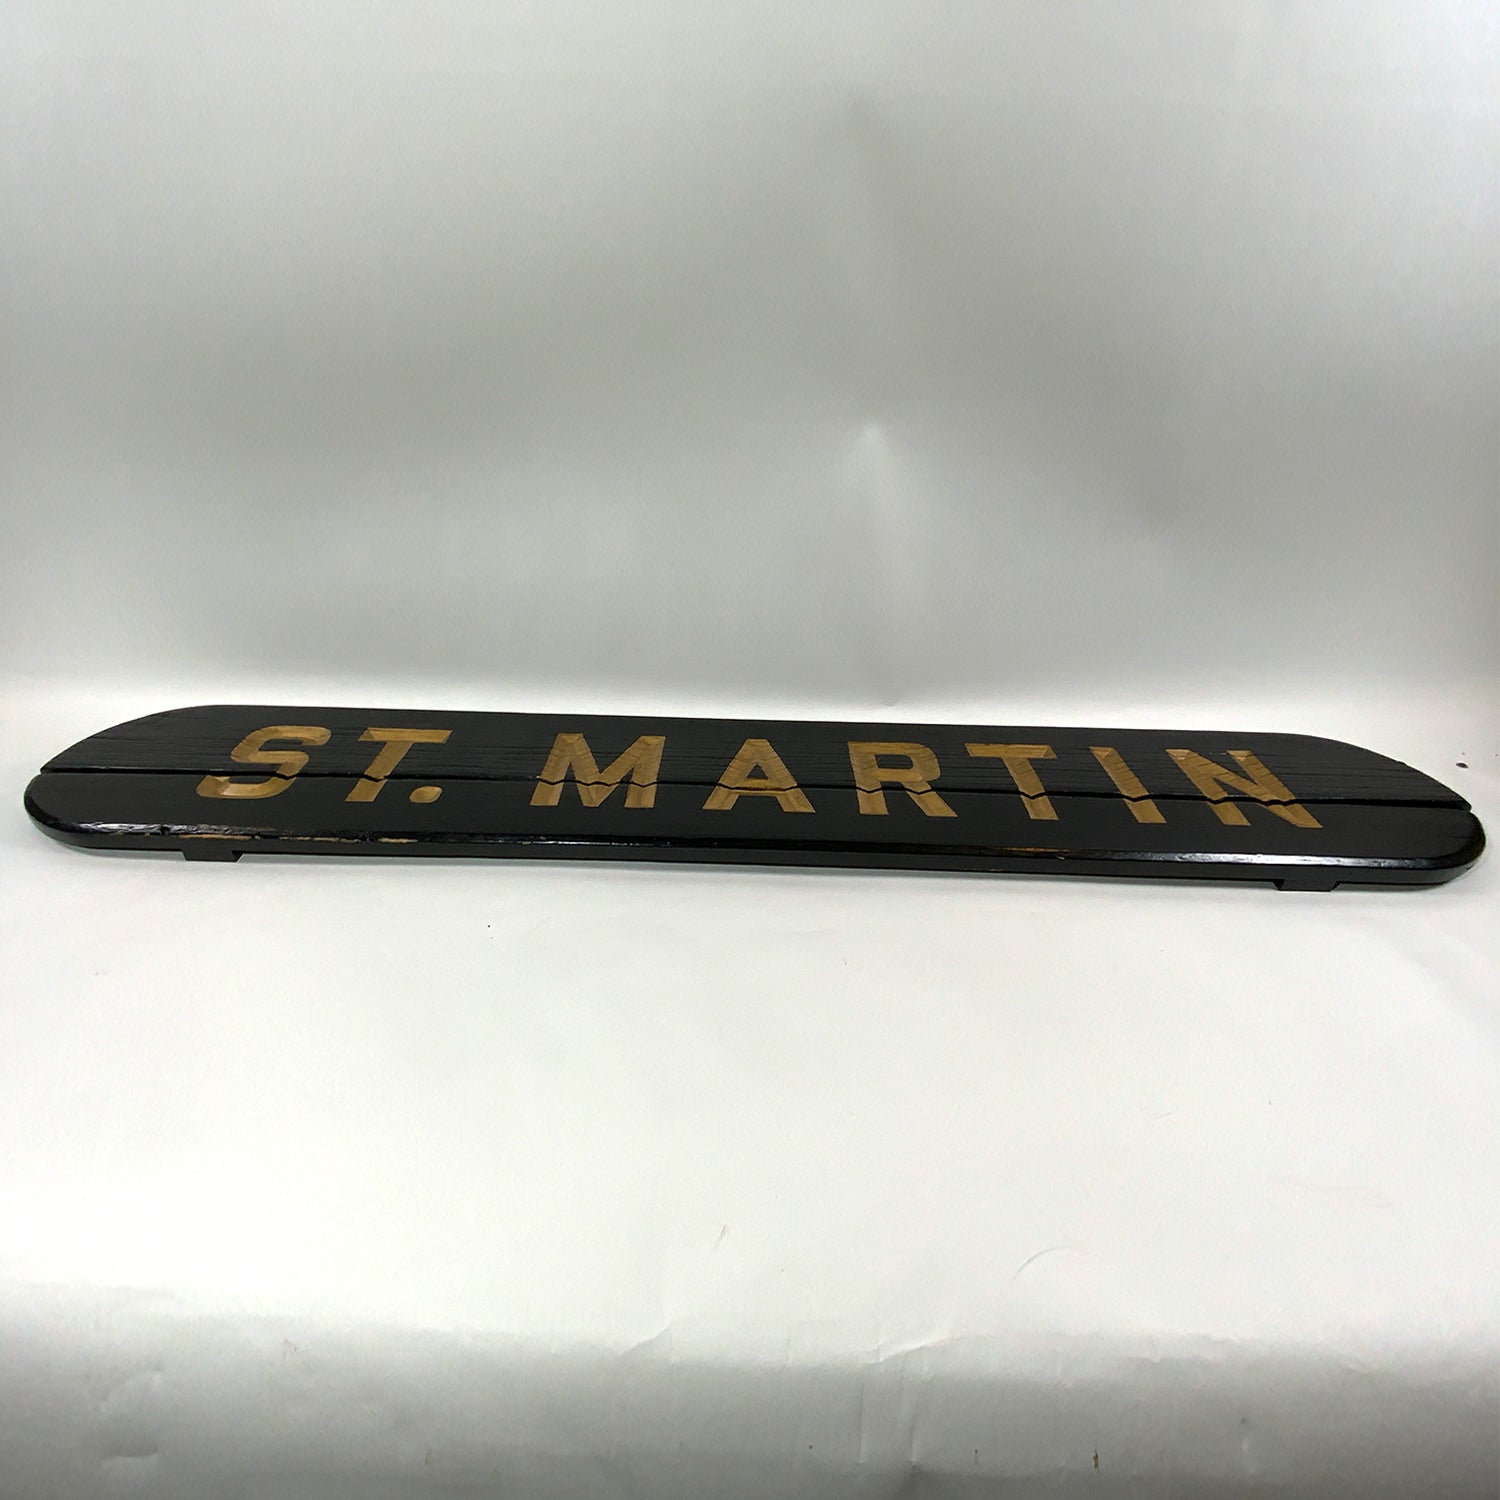 Ship Name Board From NY Tugboat "St. Martin" - Lannan Gallery